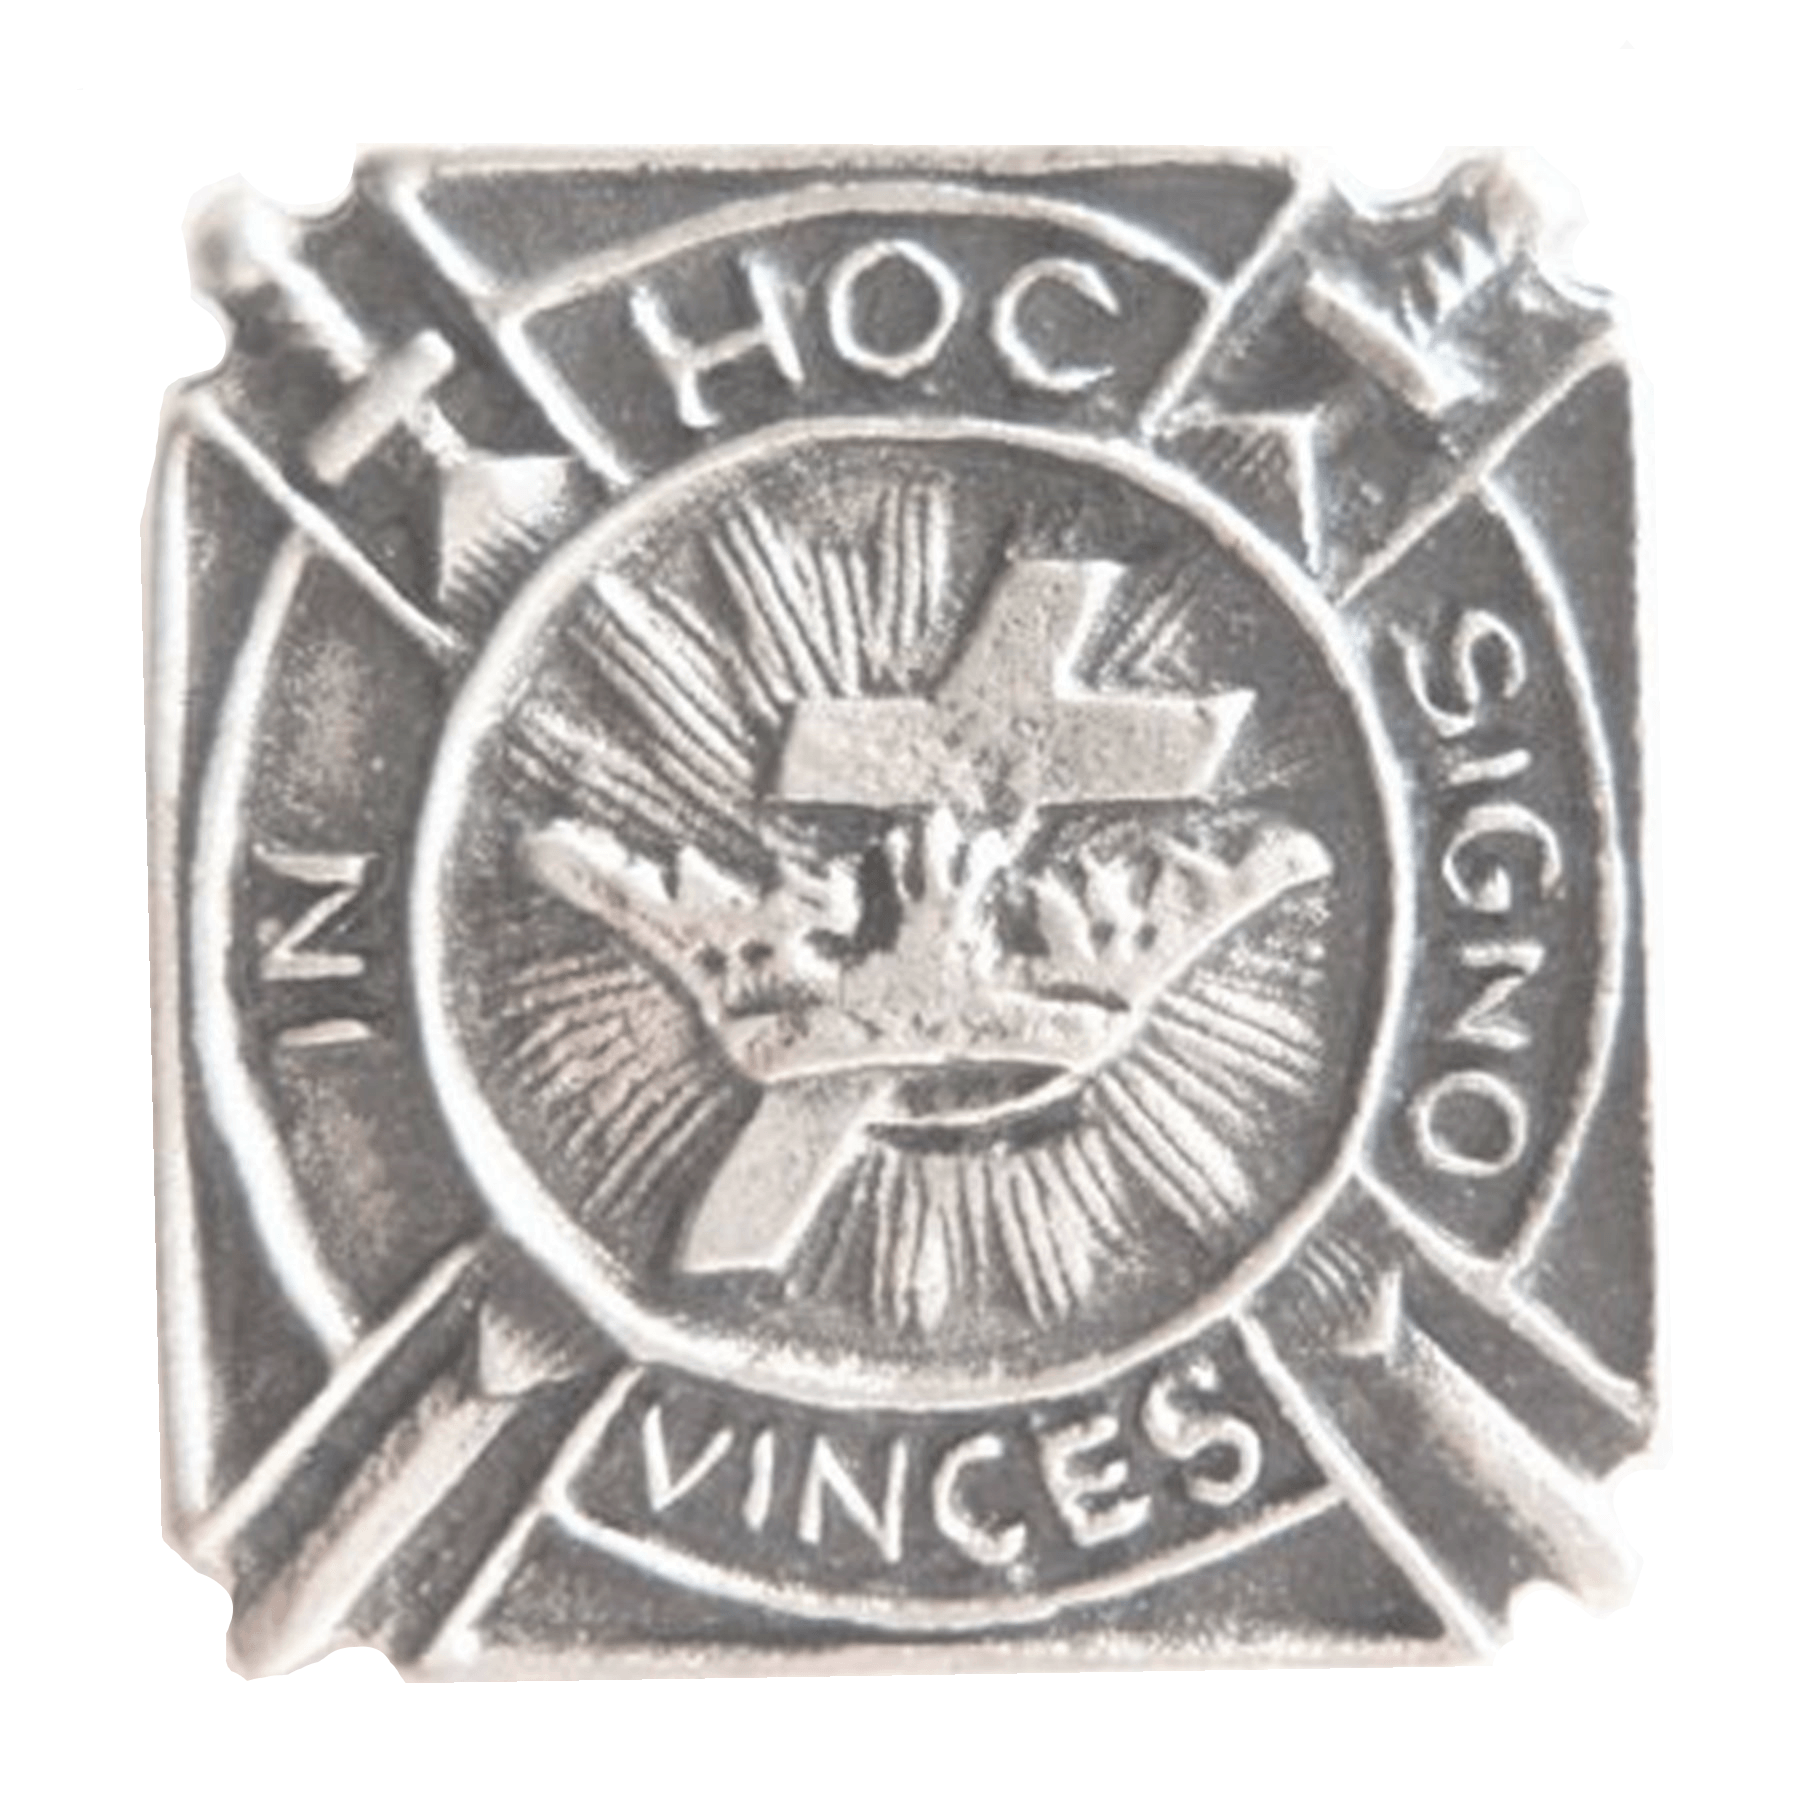 Knights Templar Logo - Masonic Knights Templar In Hoc Signo Vinces Emblem Pewter Pin Badge